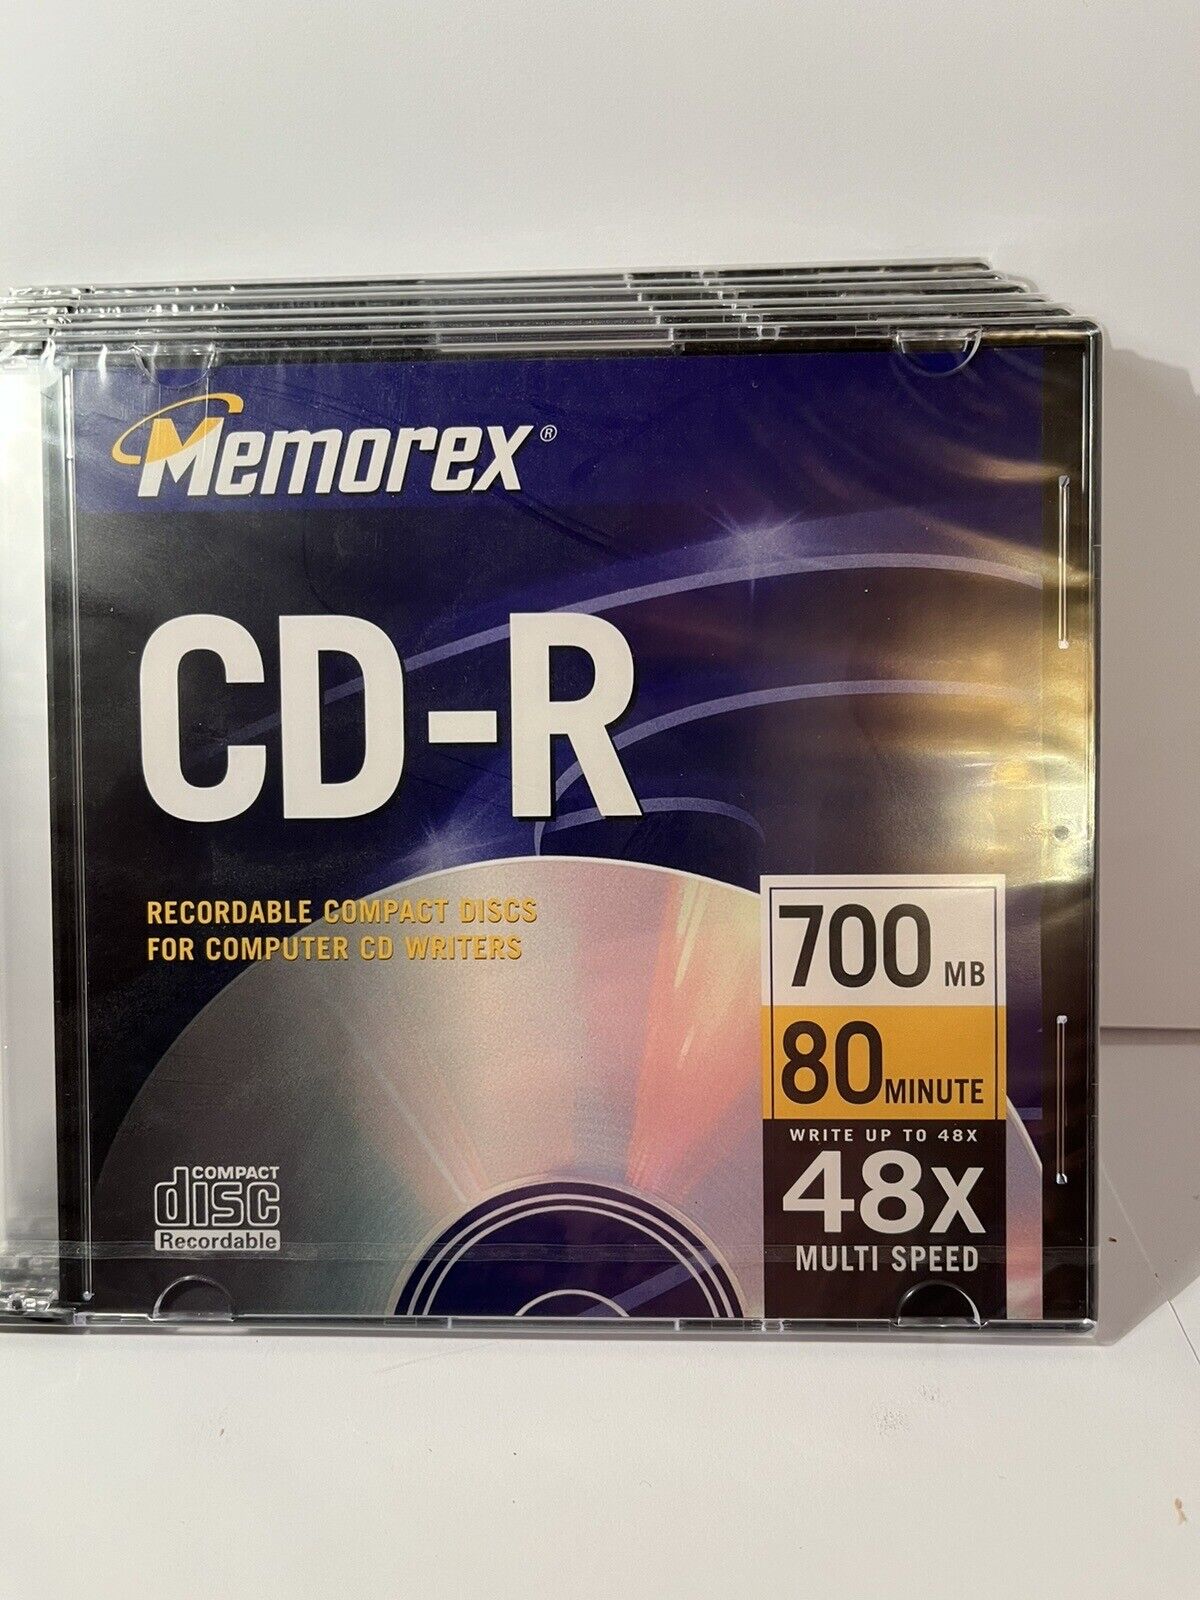 6 New Memorex CD-R Recordable Compact Discs 700 MB 80 Min 48x w/Jewel Cases